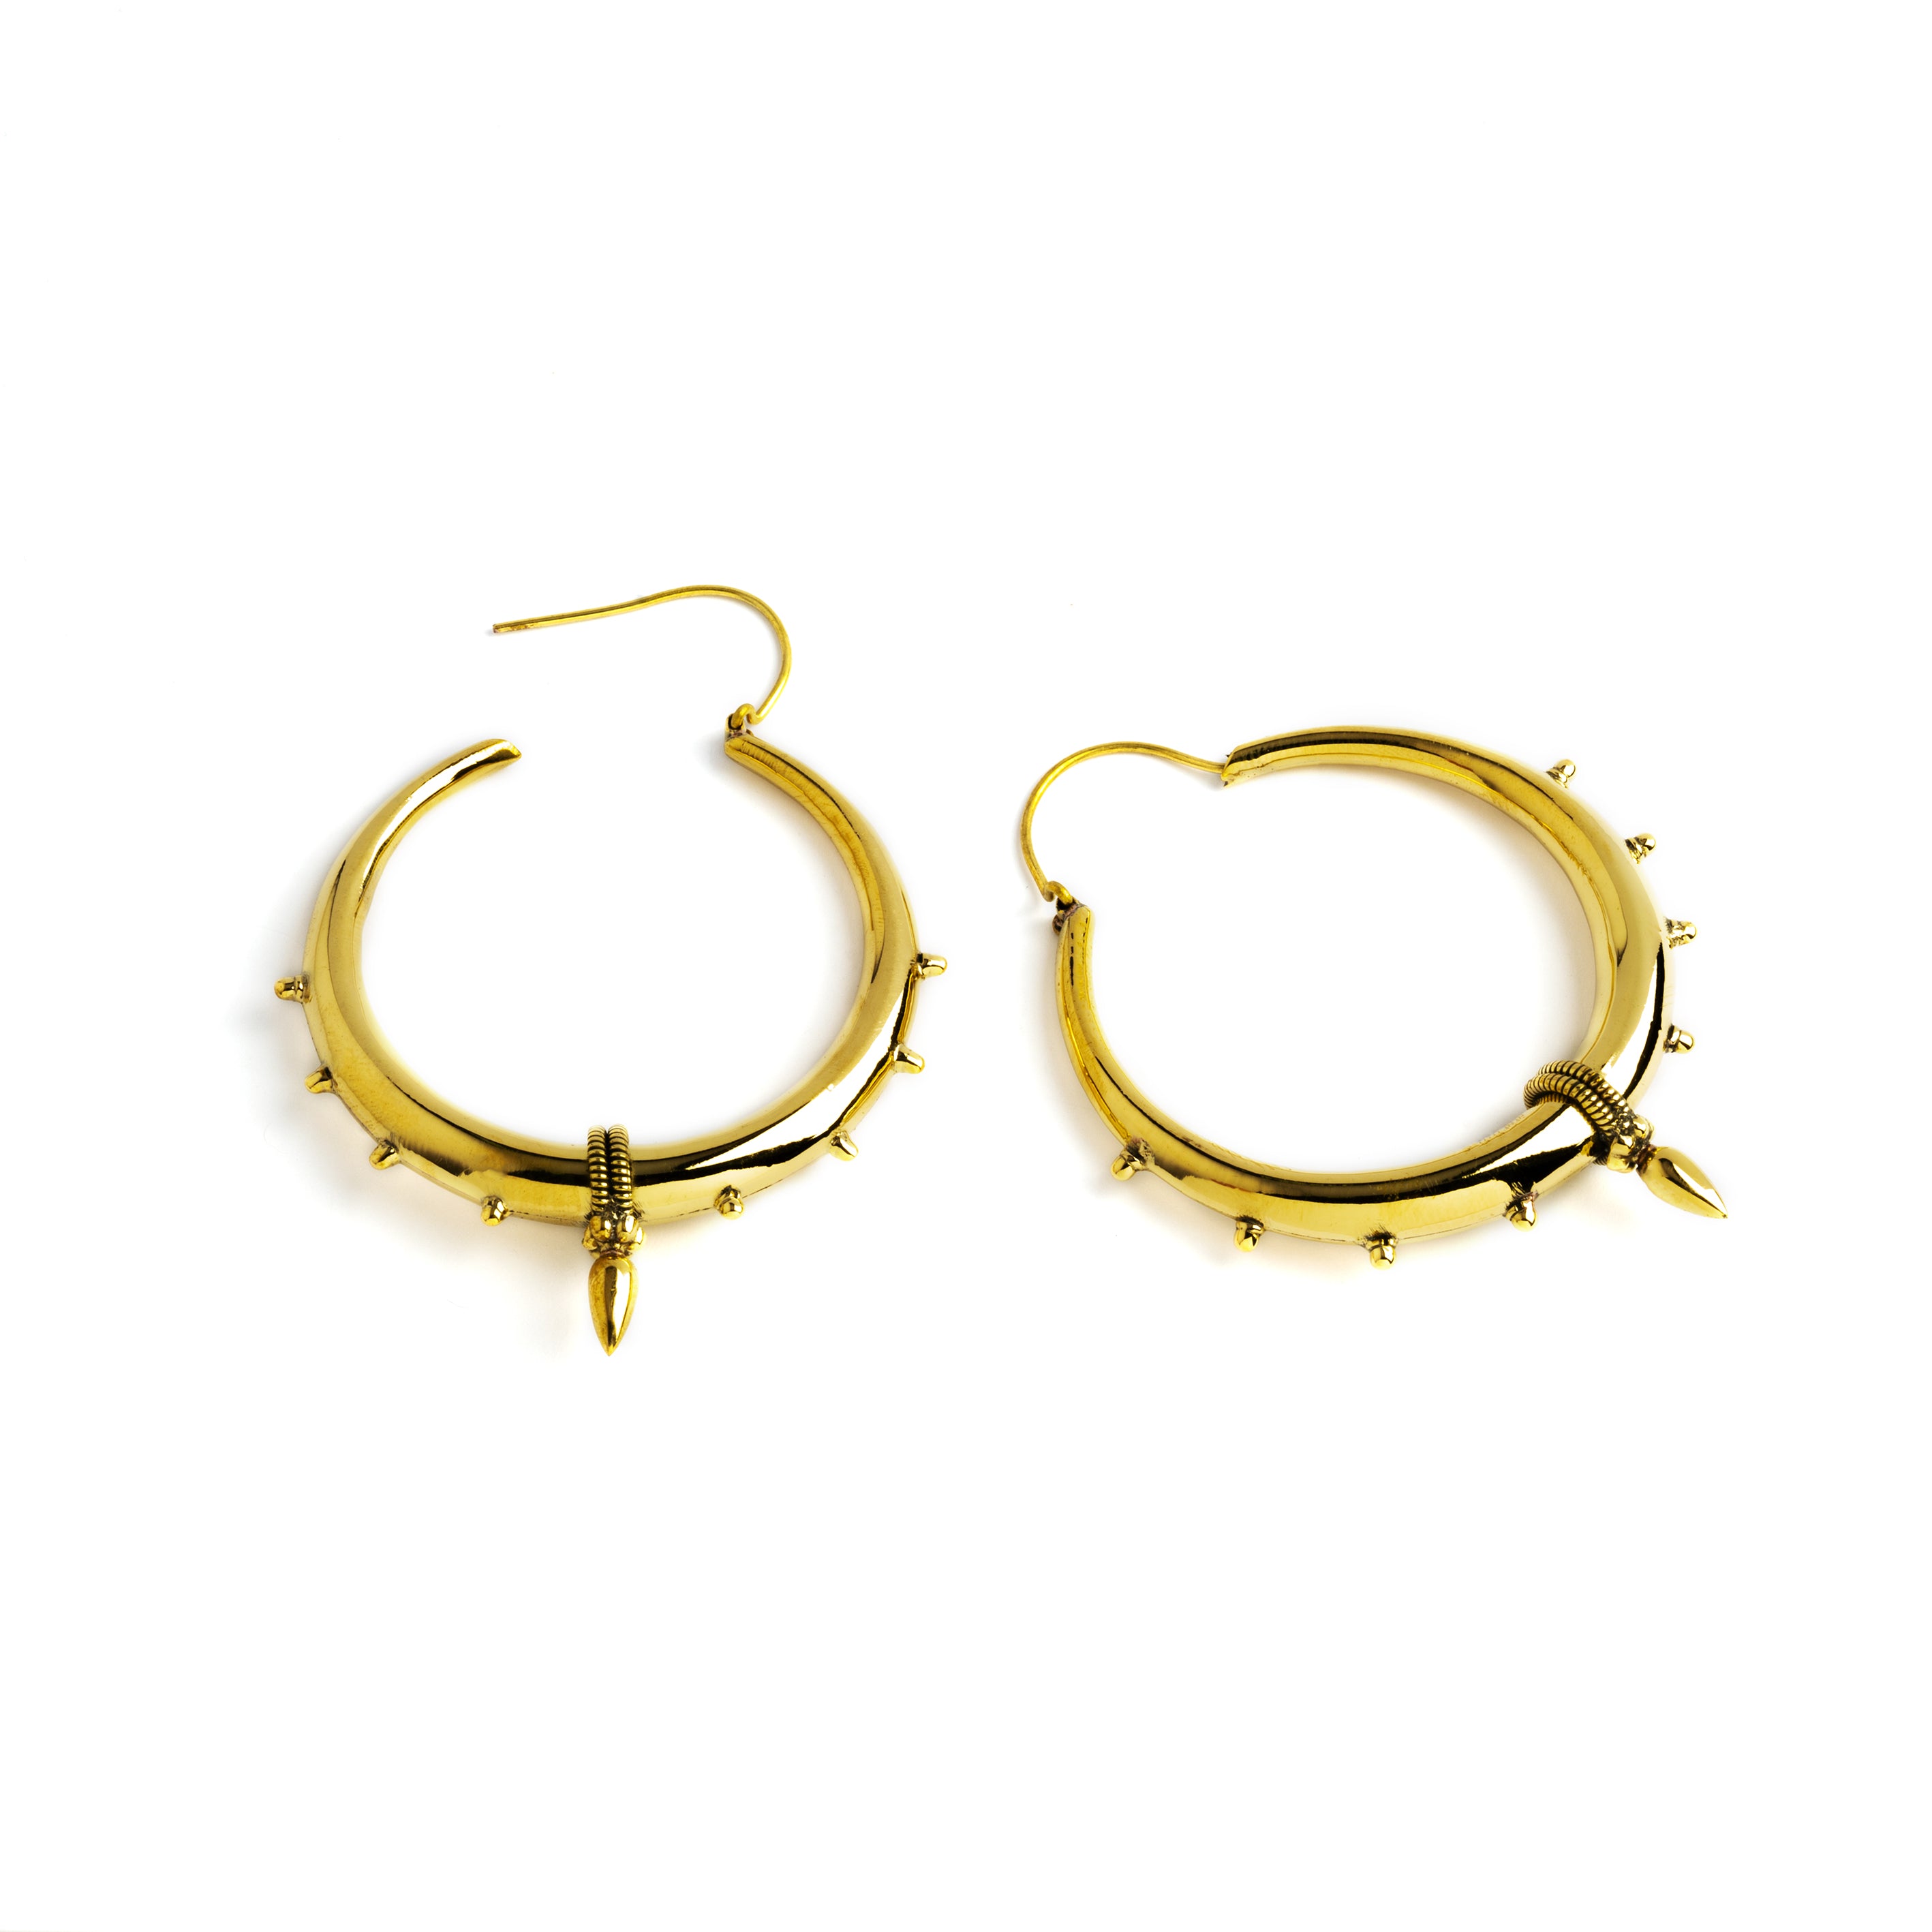 Golden Warrior Earrings with open clasp